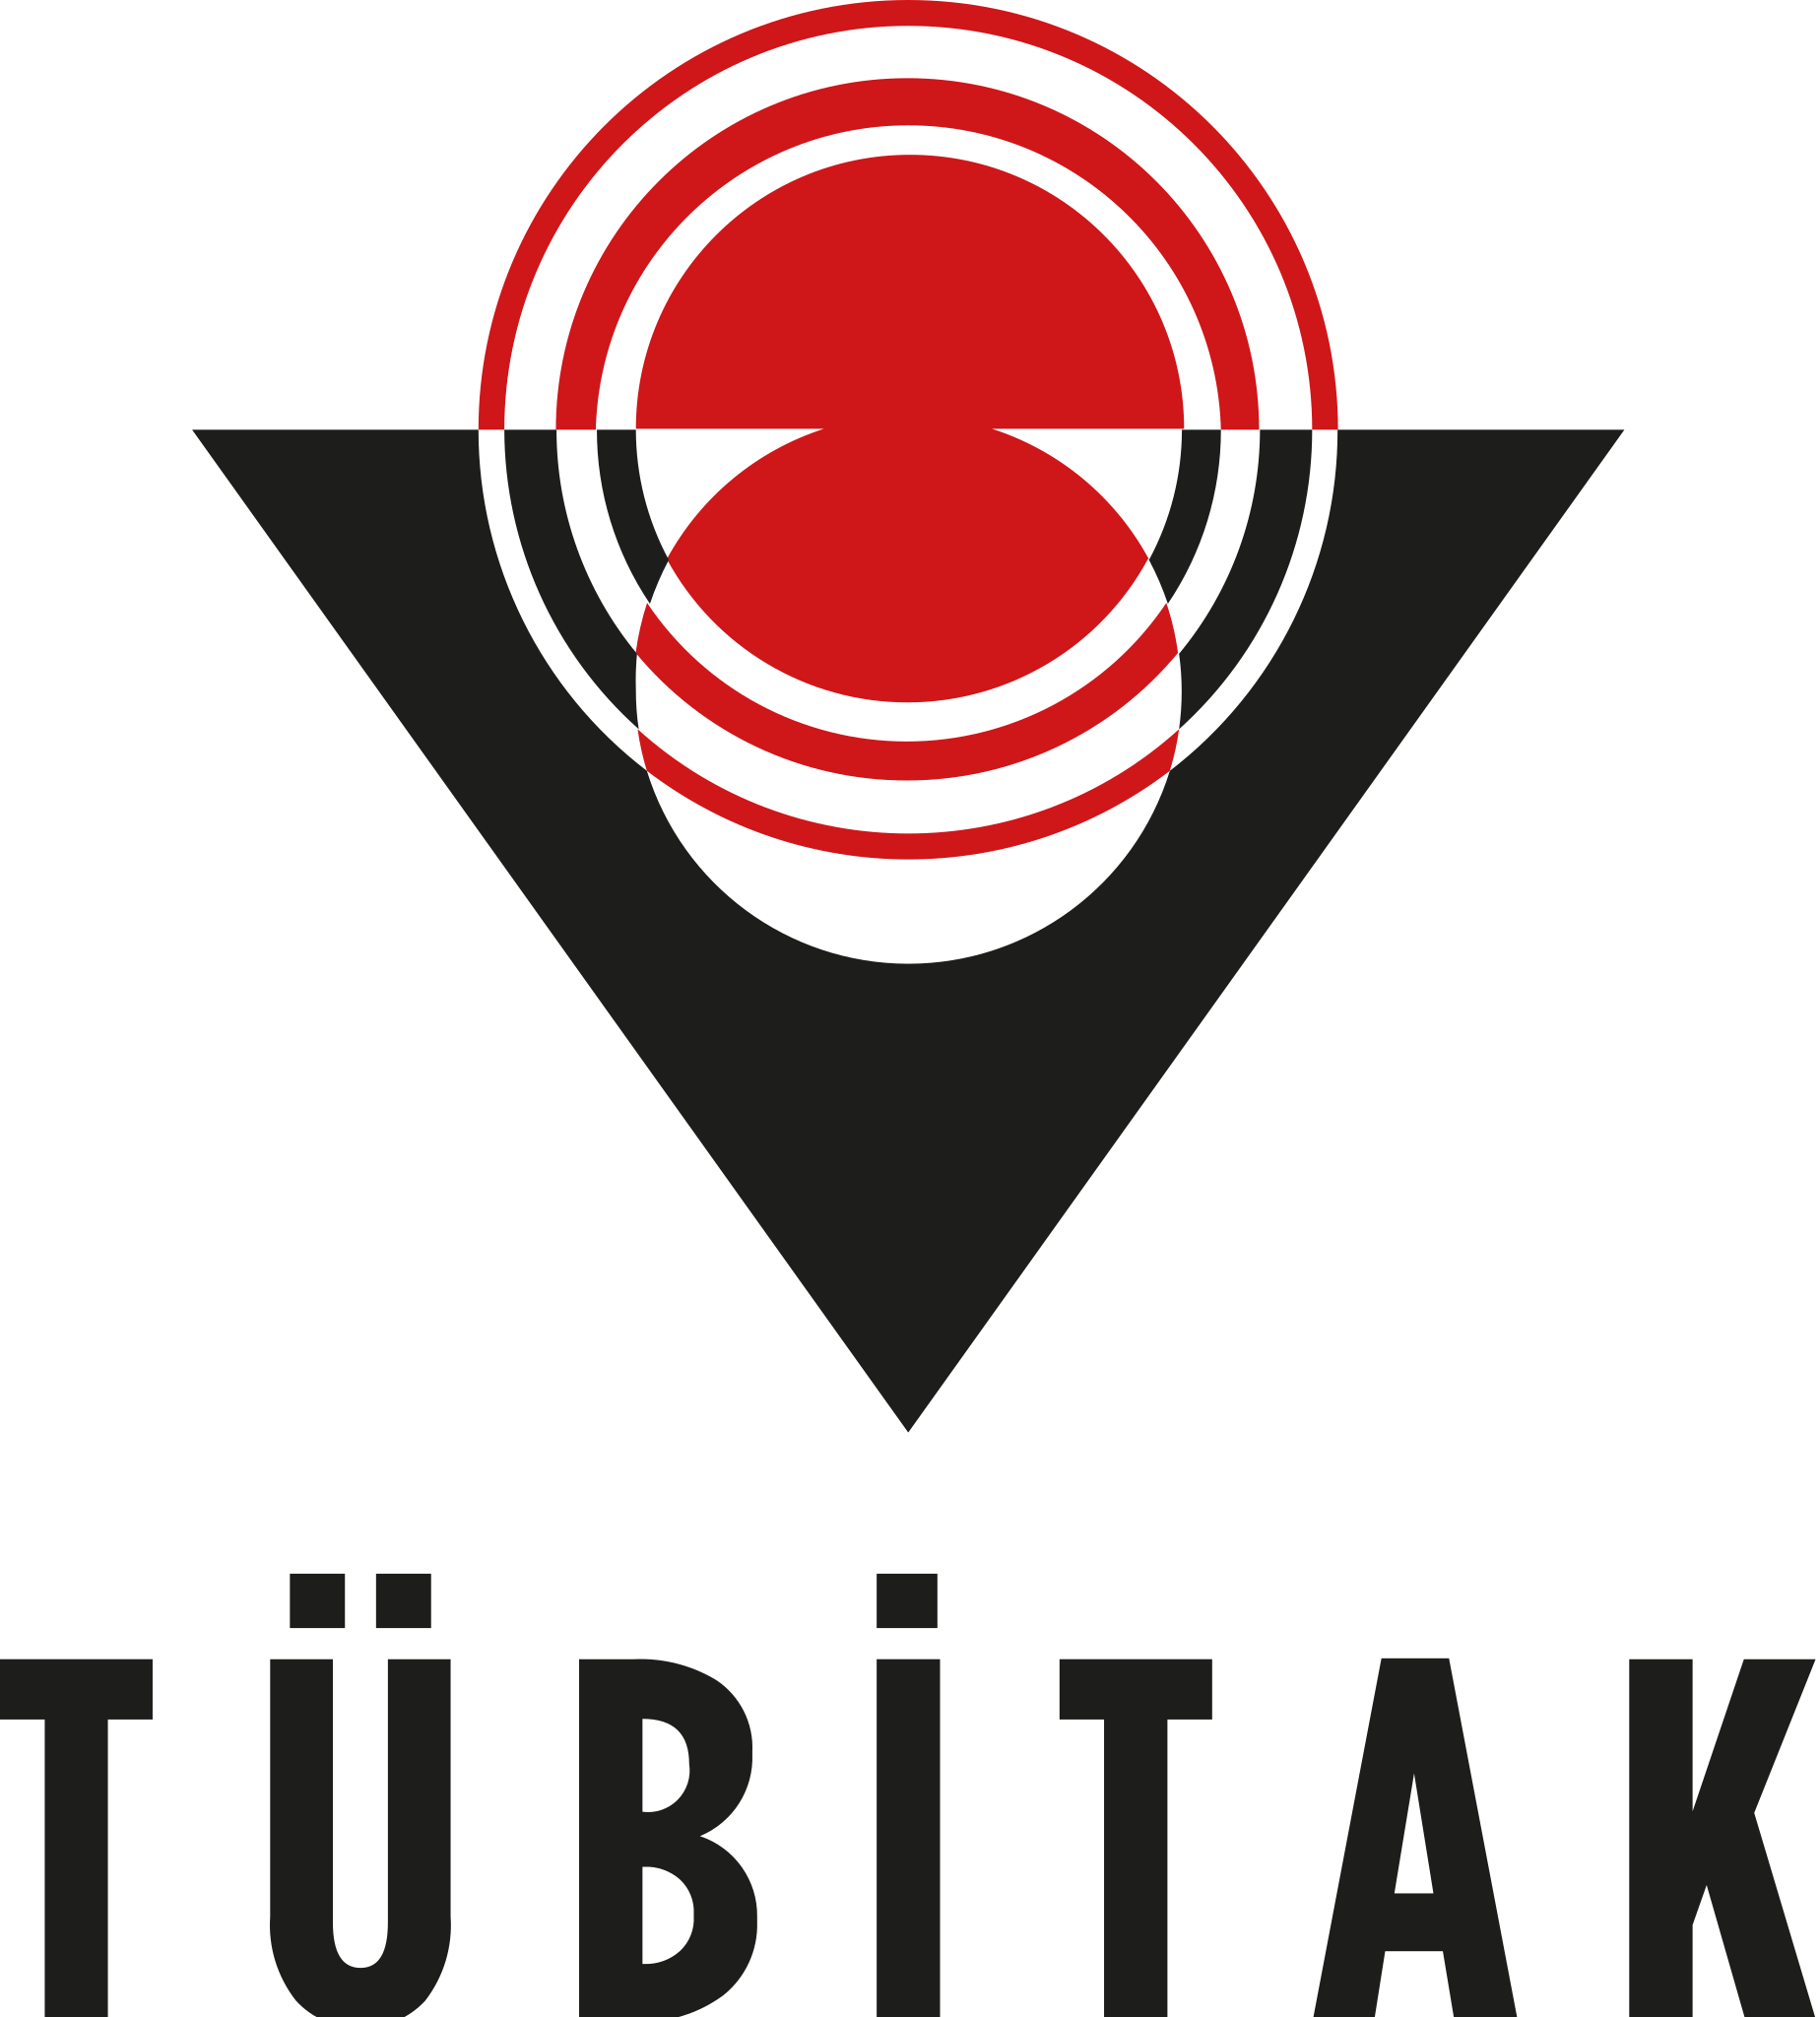 TÜBİTAK_logo.svg.png (142 KB)